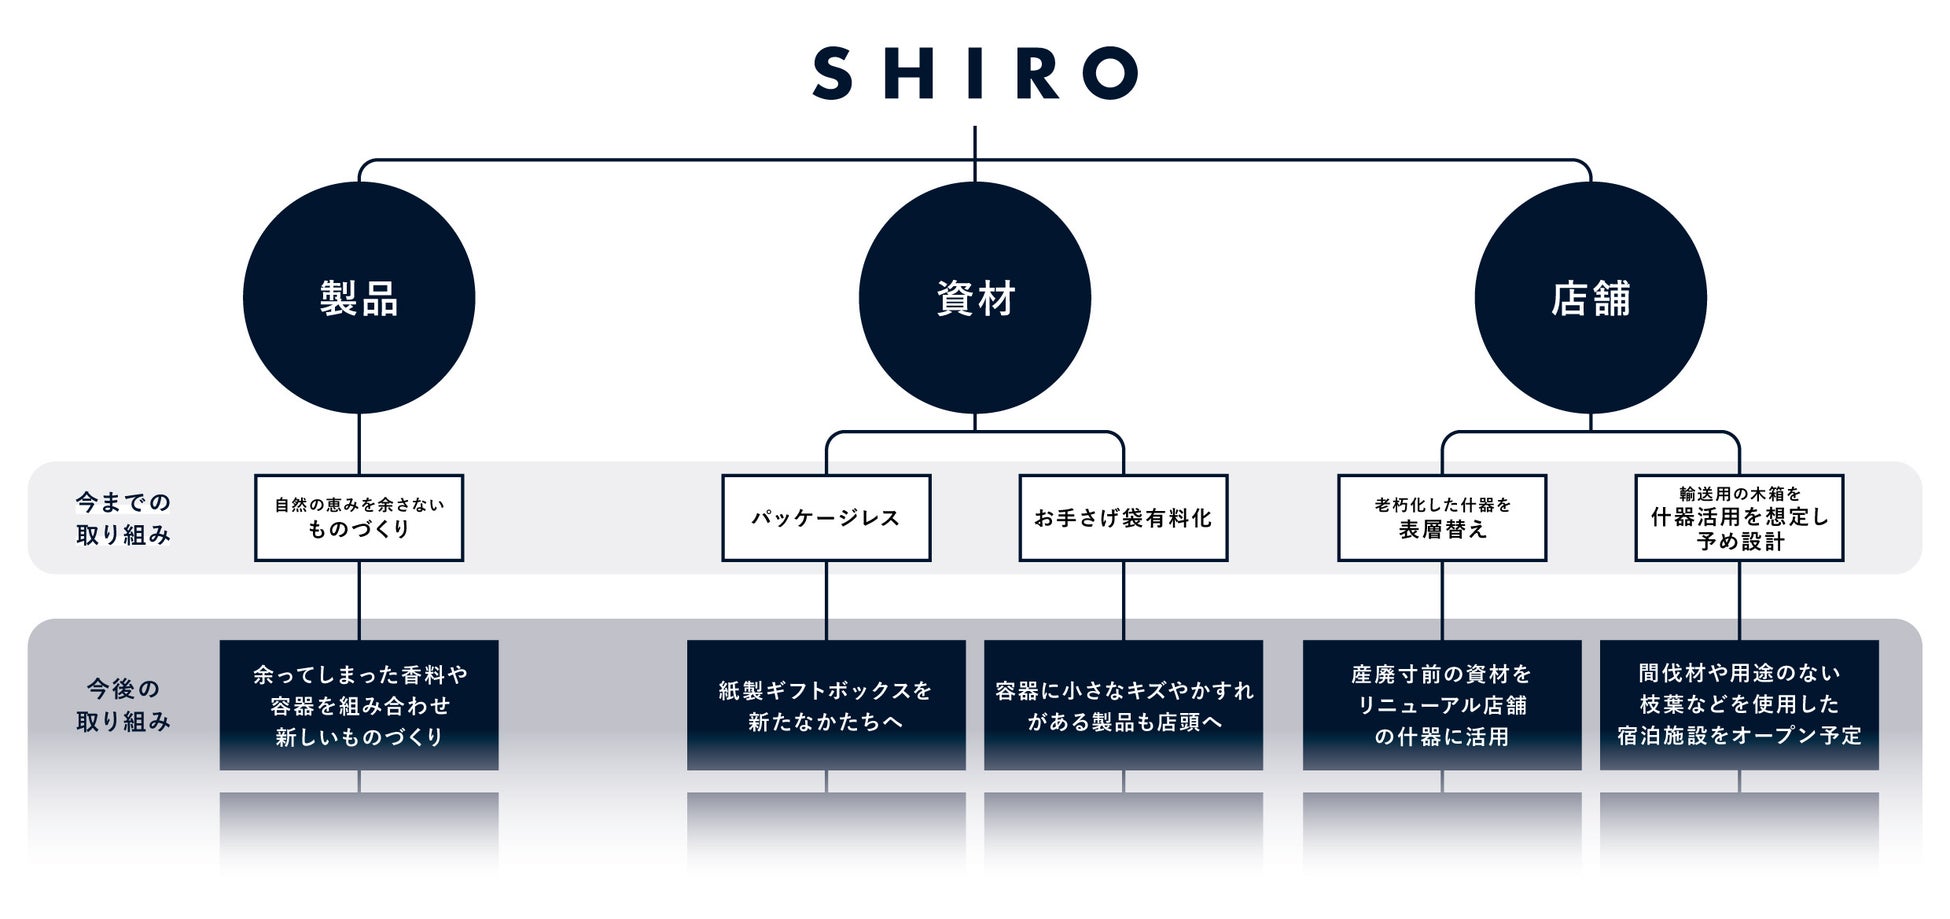 【SHIRO 15年目の宣言】2024年、SHIROが生まれて15年目。すべての資源の価値を見つめ直し、本質的な循環のた...